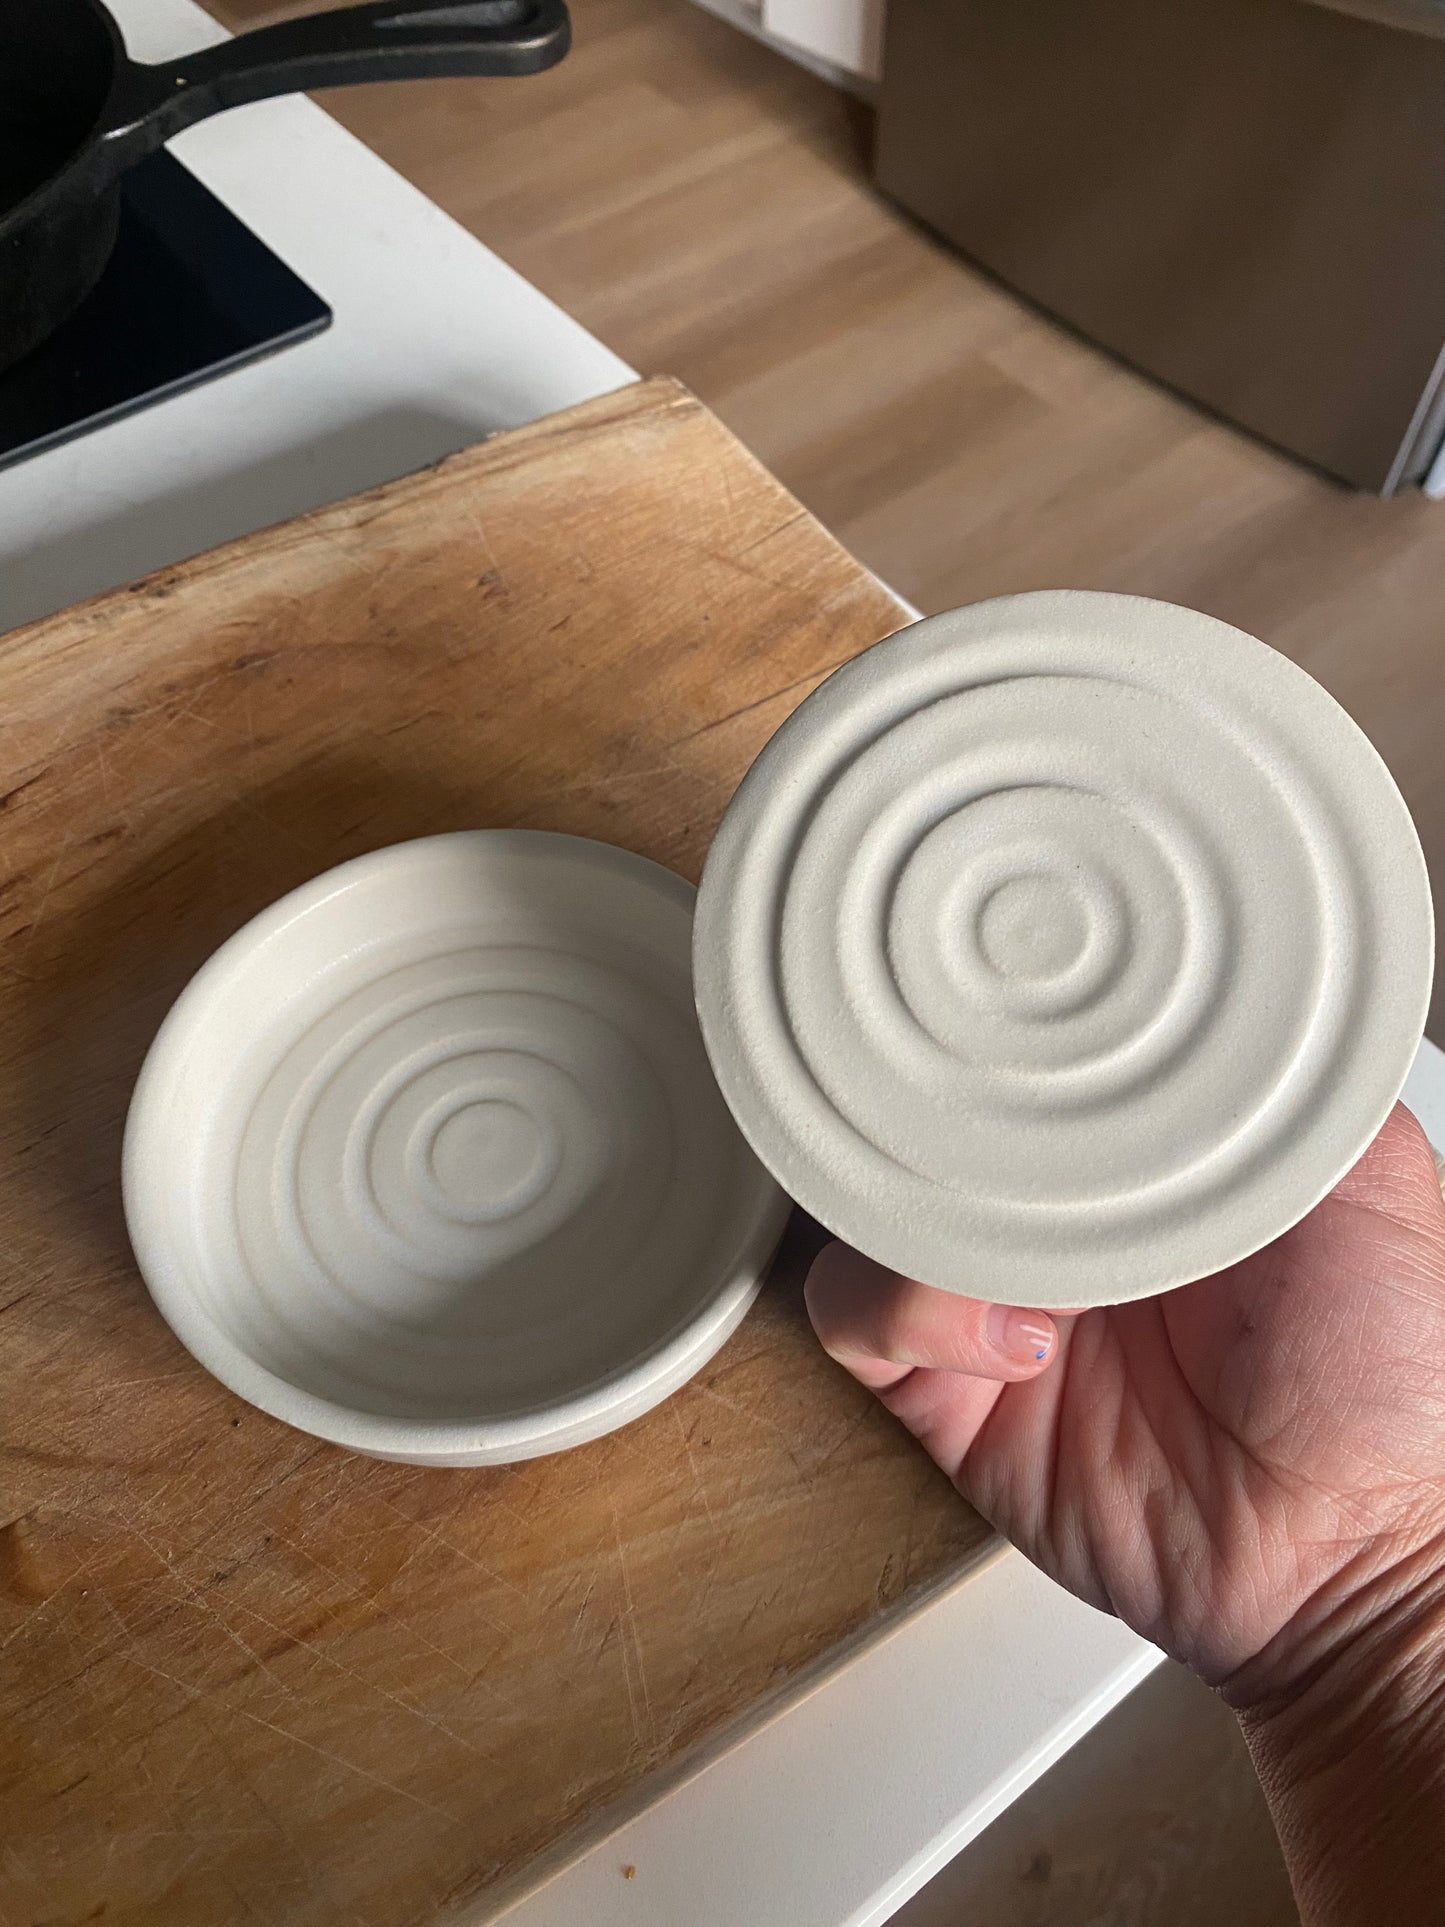 Pepo Ceramics Patty Press